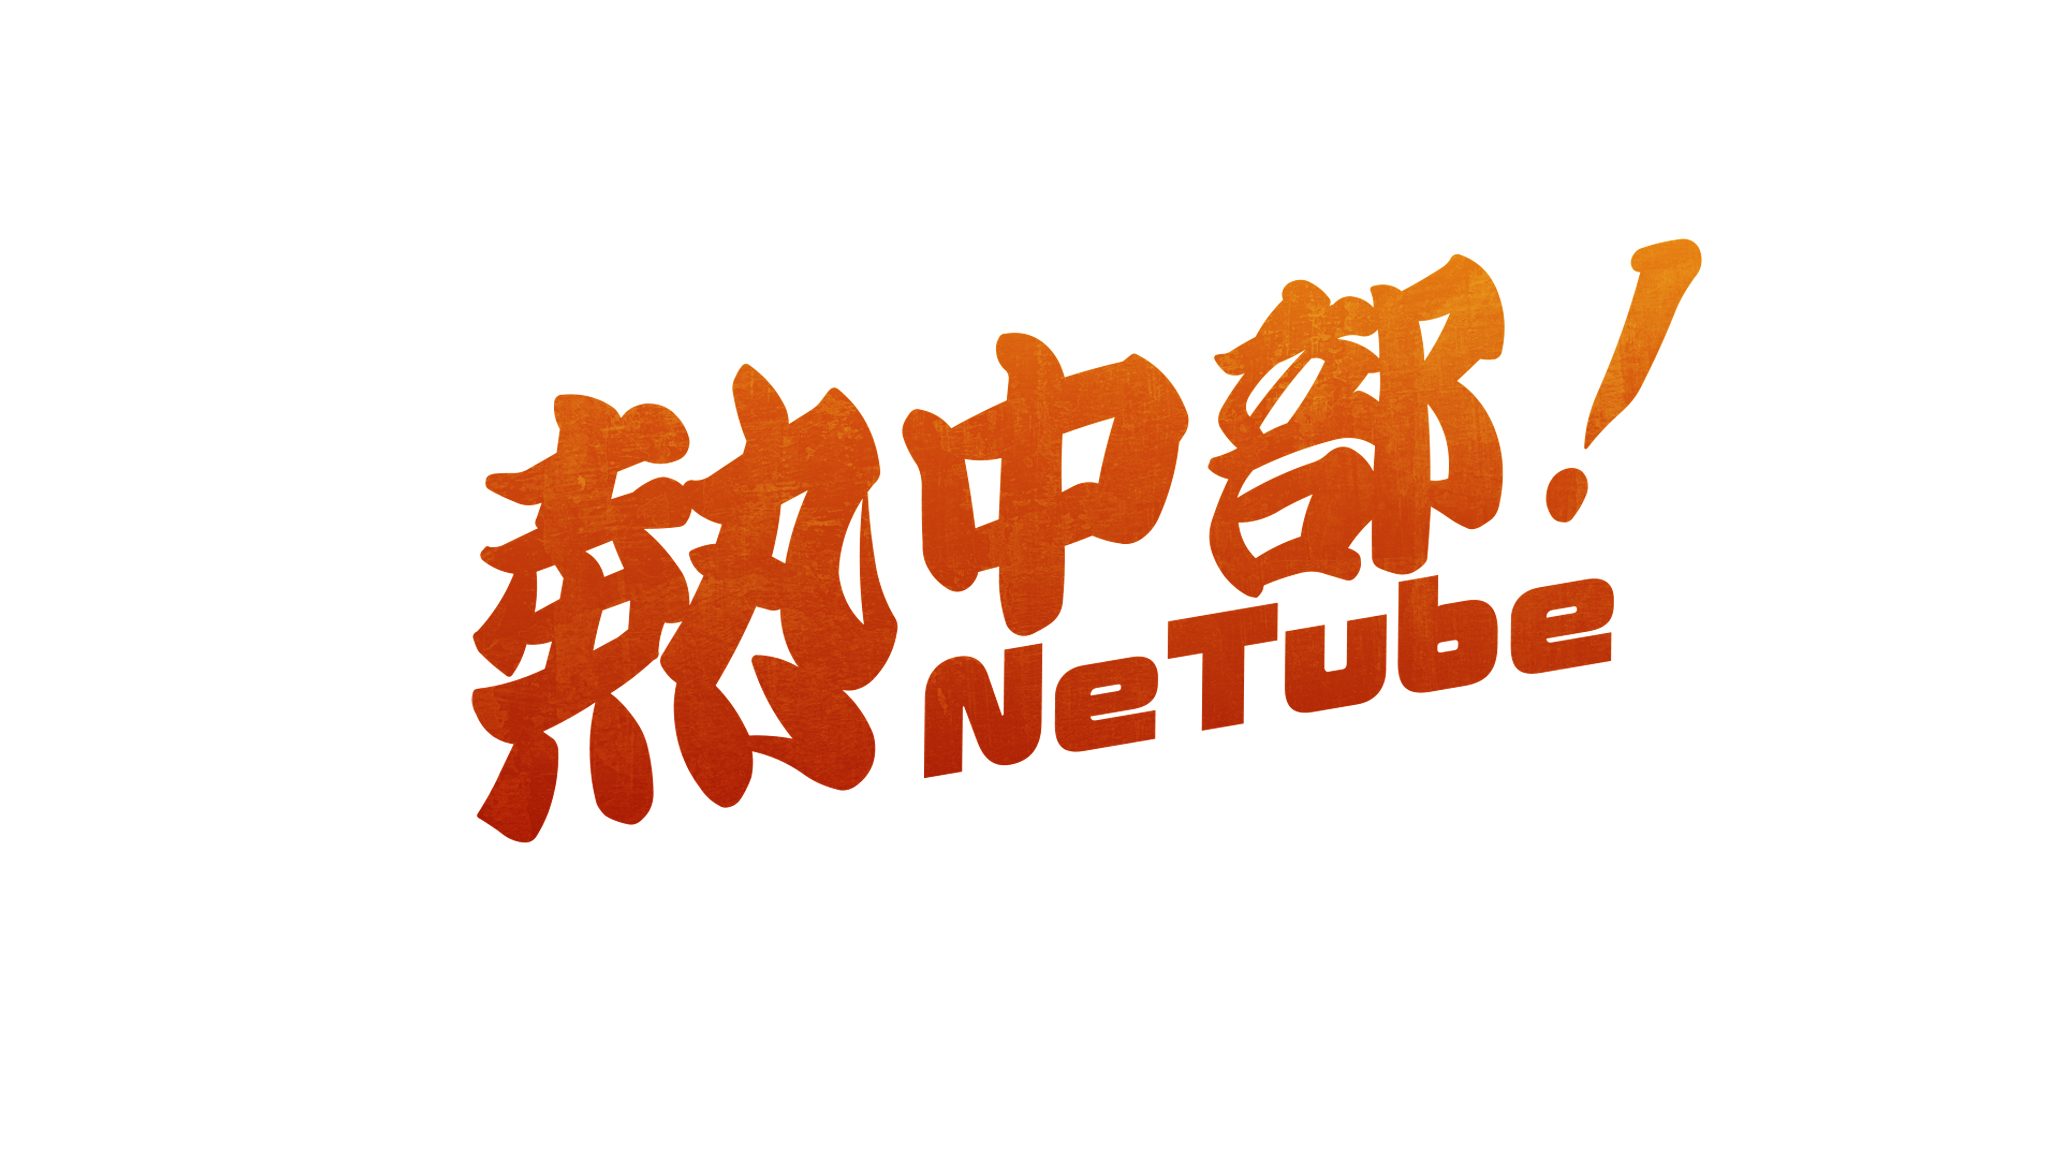 NeTuber Channel